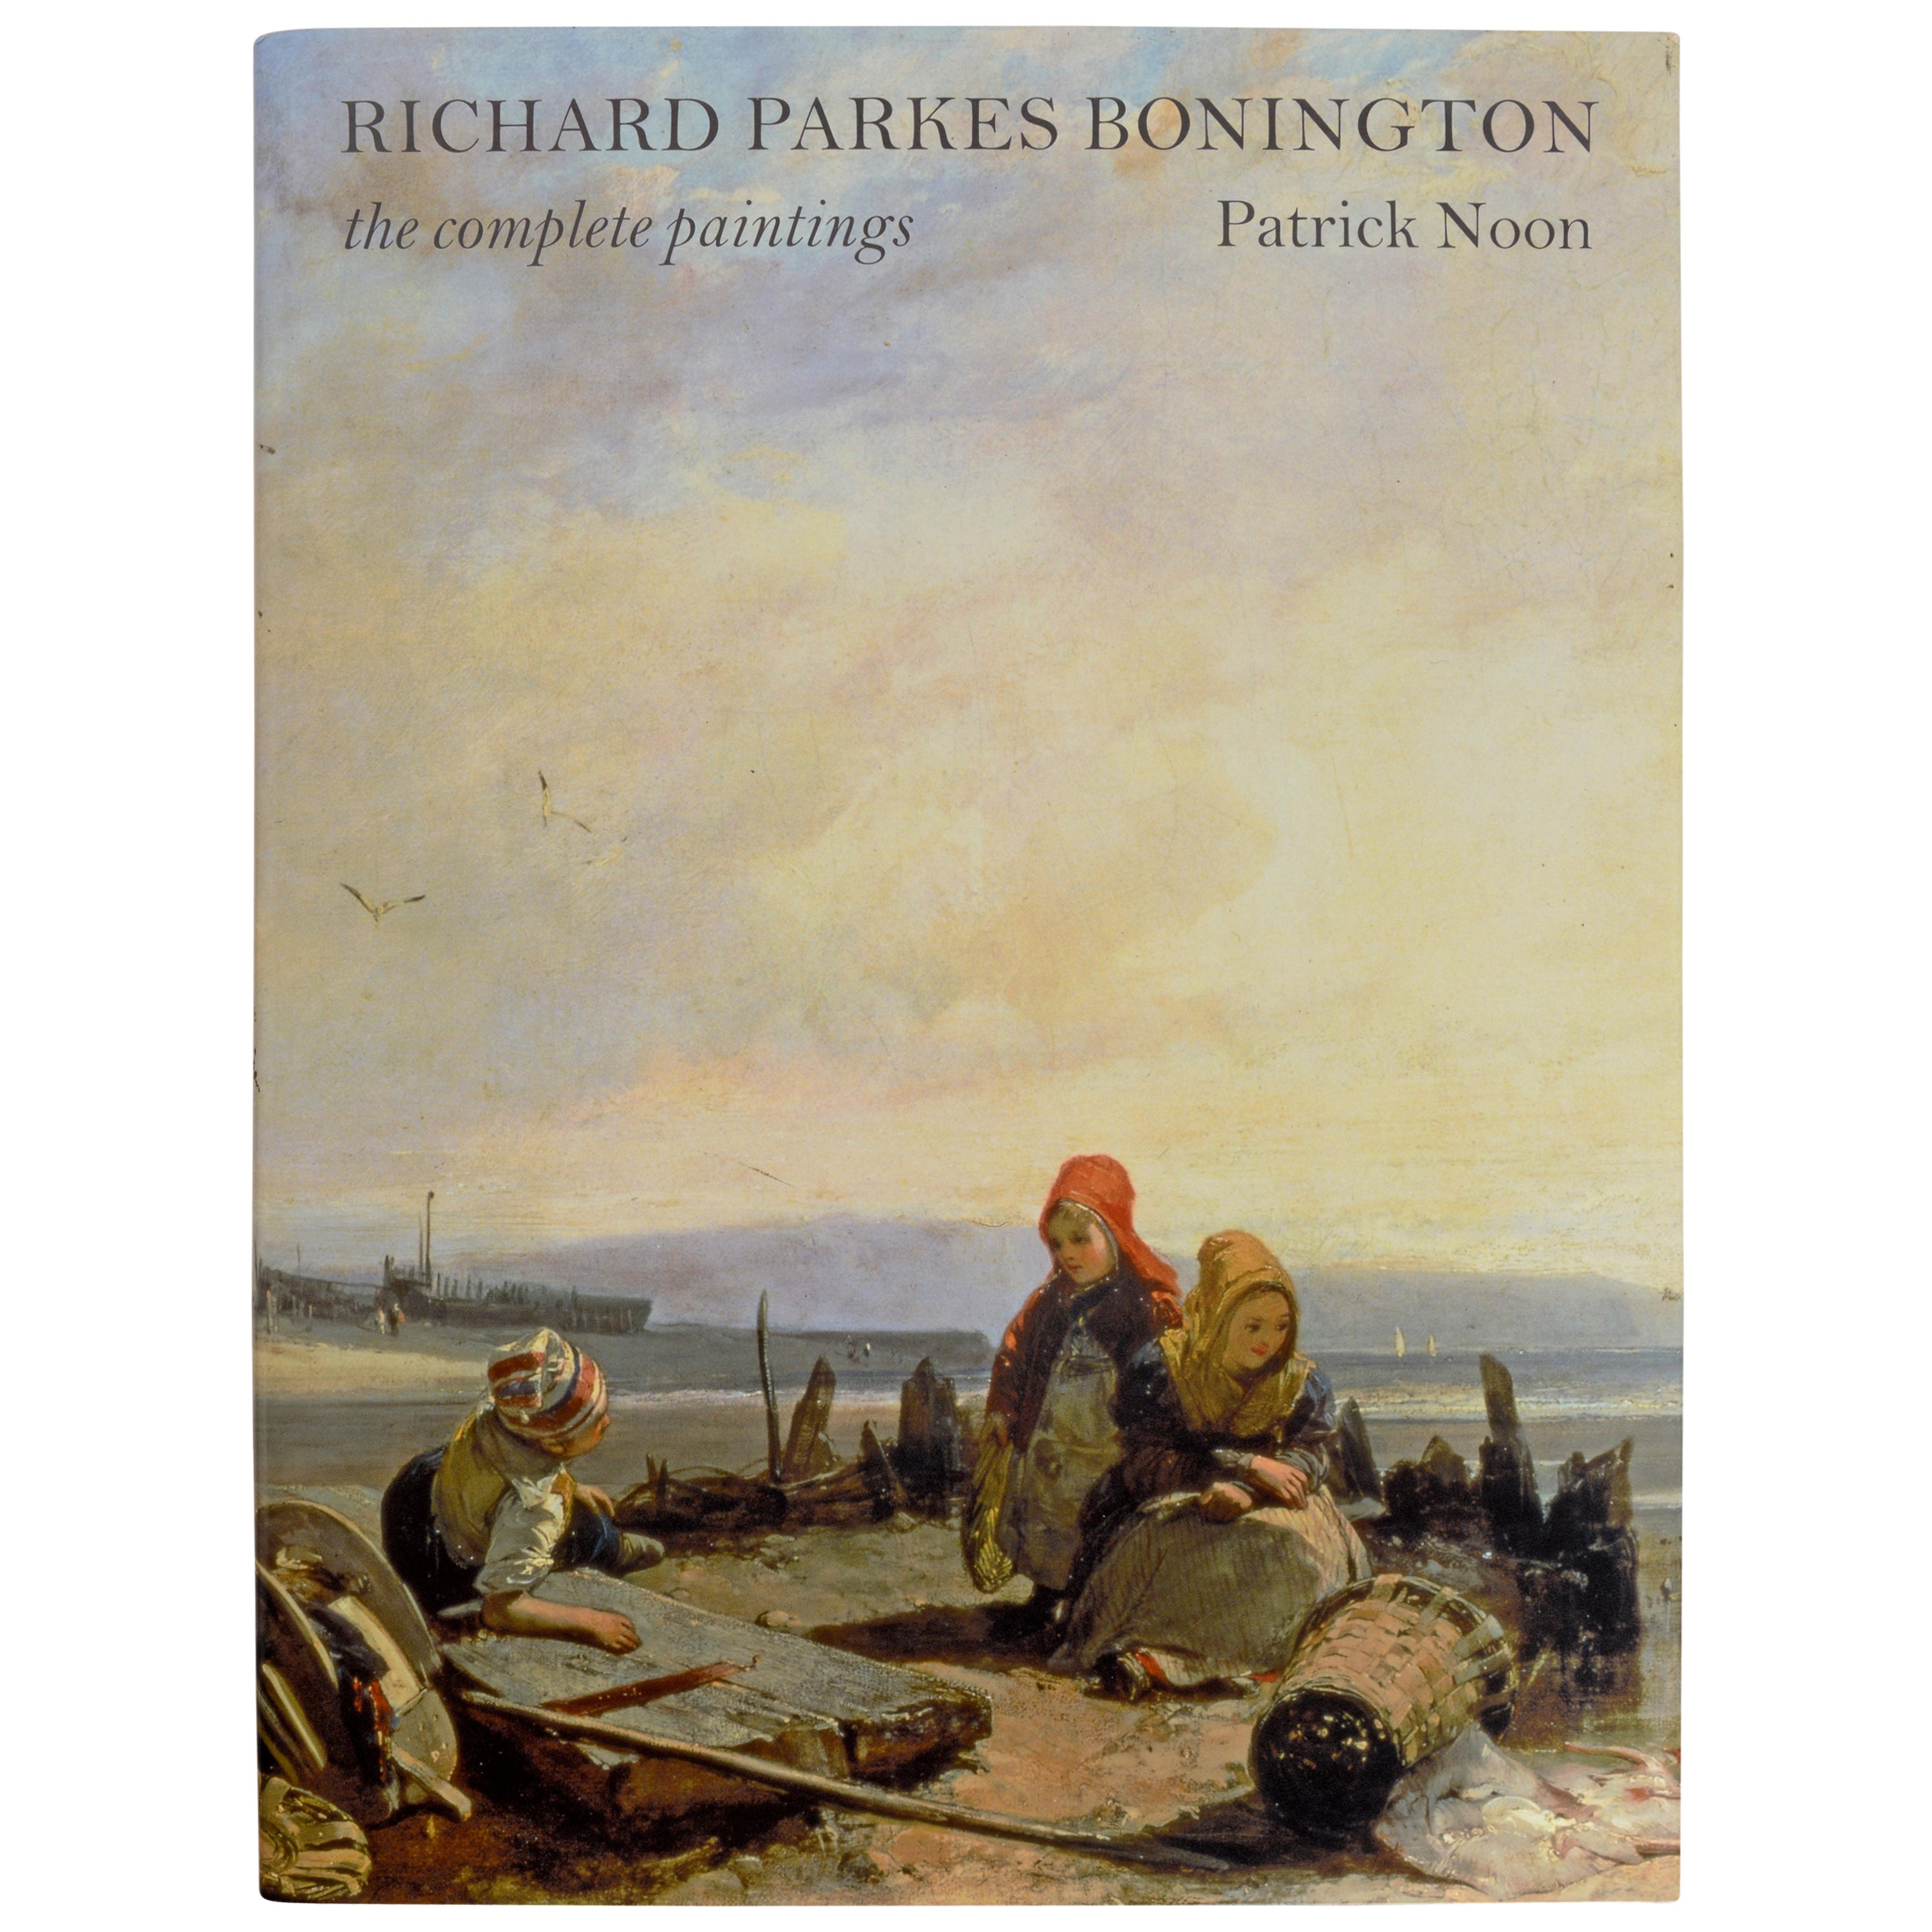 Richard Parkes Bonington, The Complete Paintings by Patrick Noon, 1st Ed